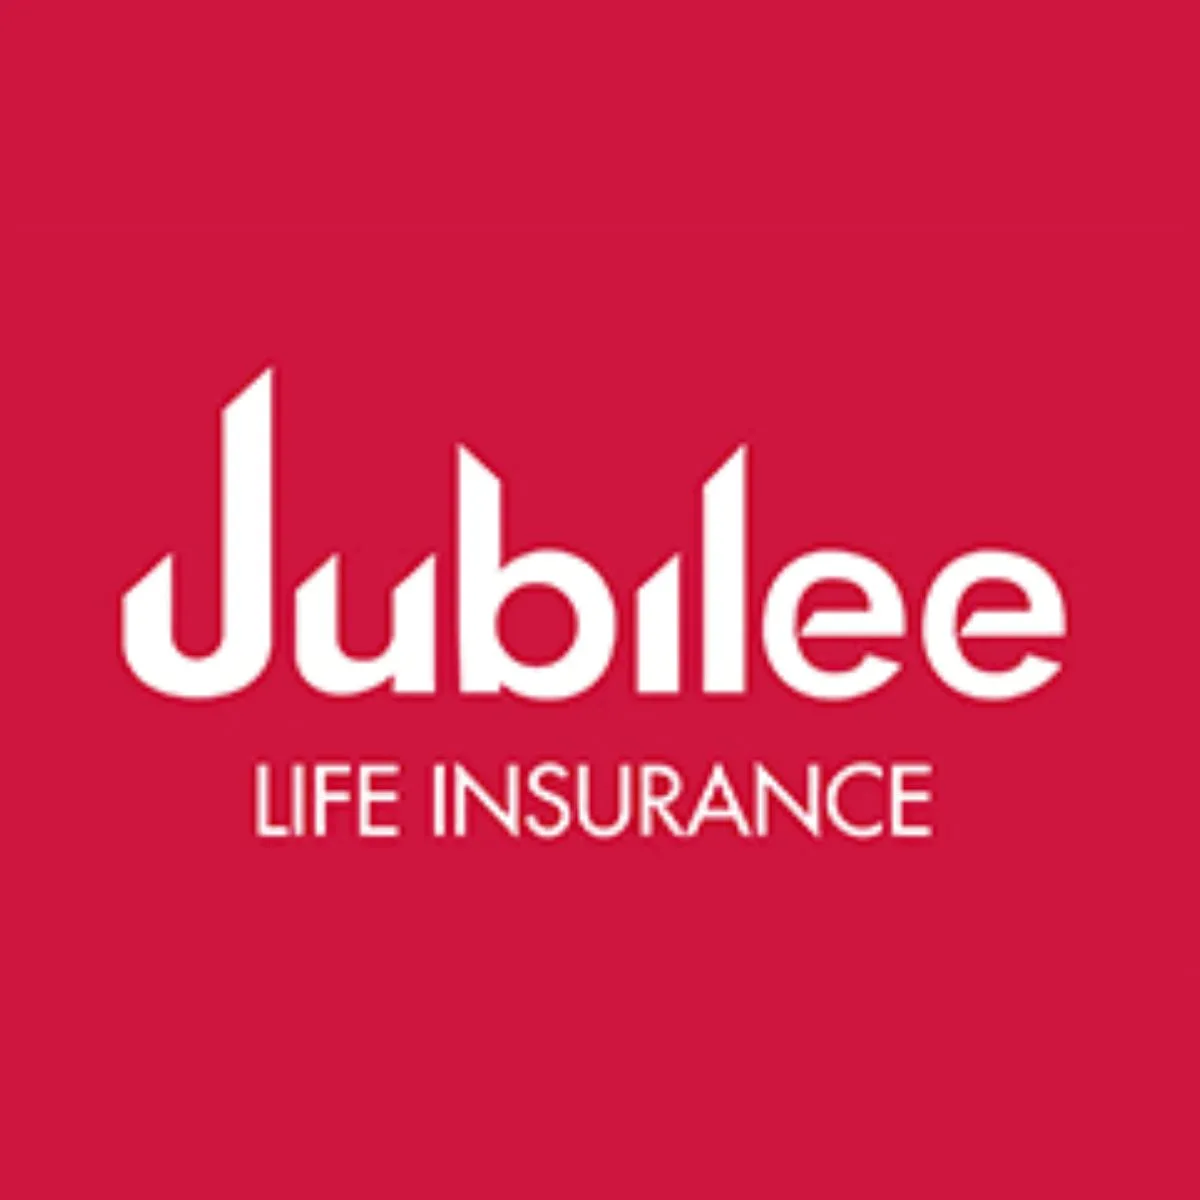 Jubilee Life Insurance Company Limited